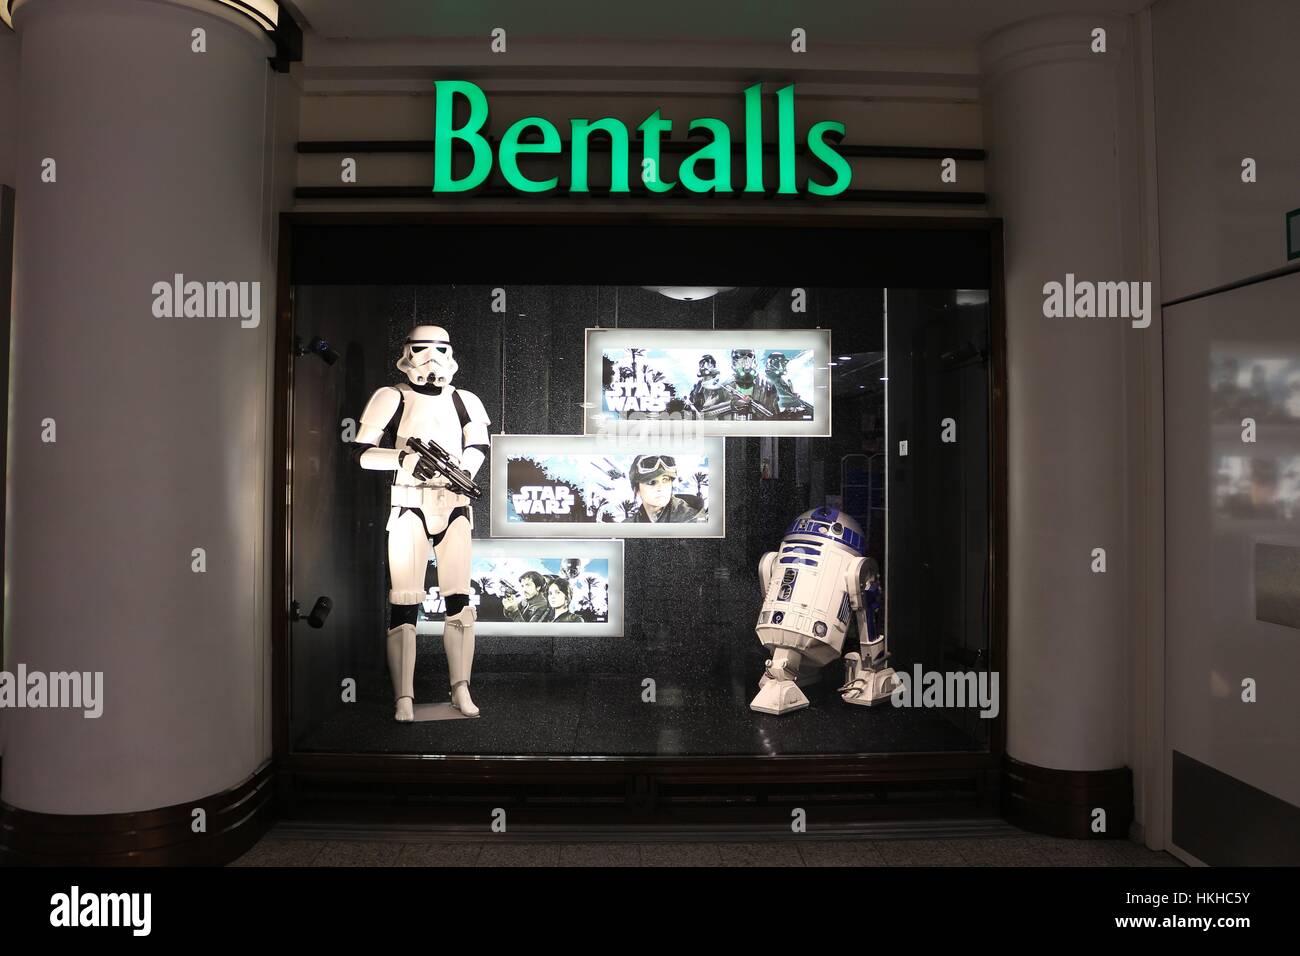 Star Wars window display at Bentalls shopping center, Kingston-upon-Thames, London. December 2016 Stock Photo